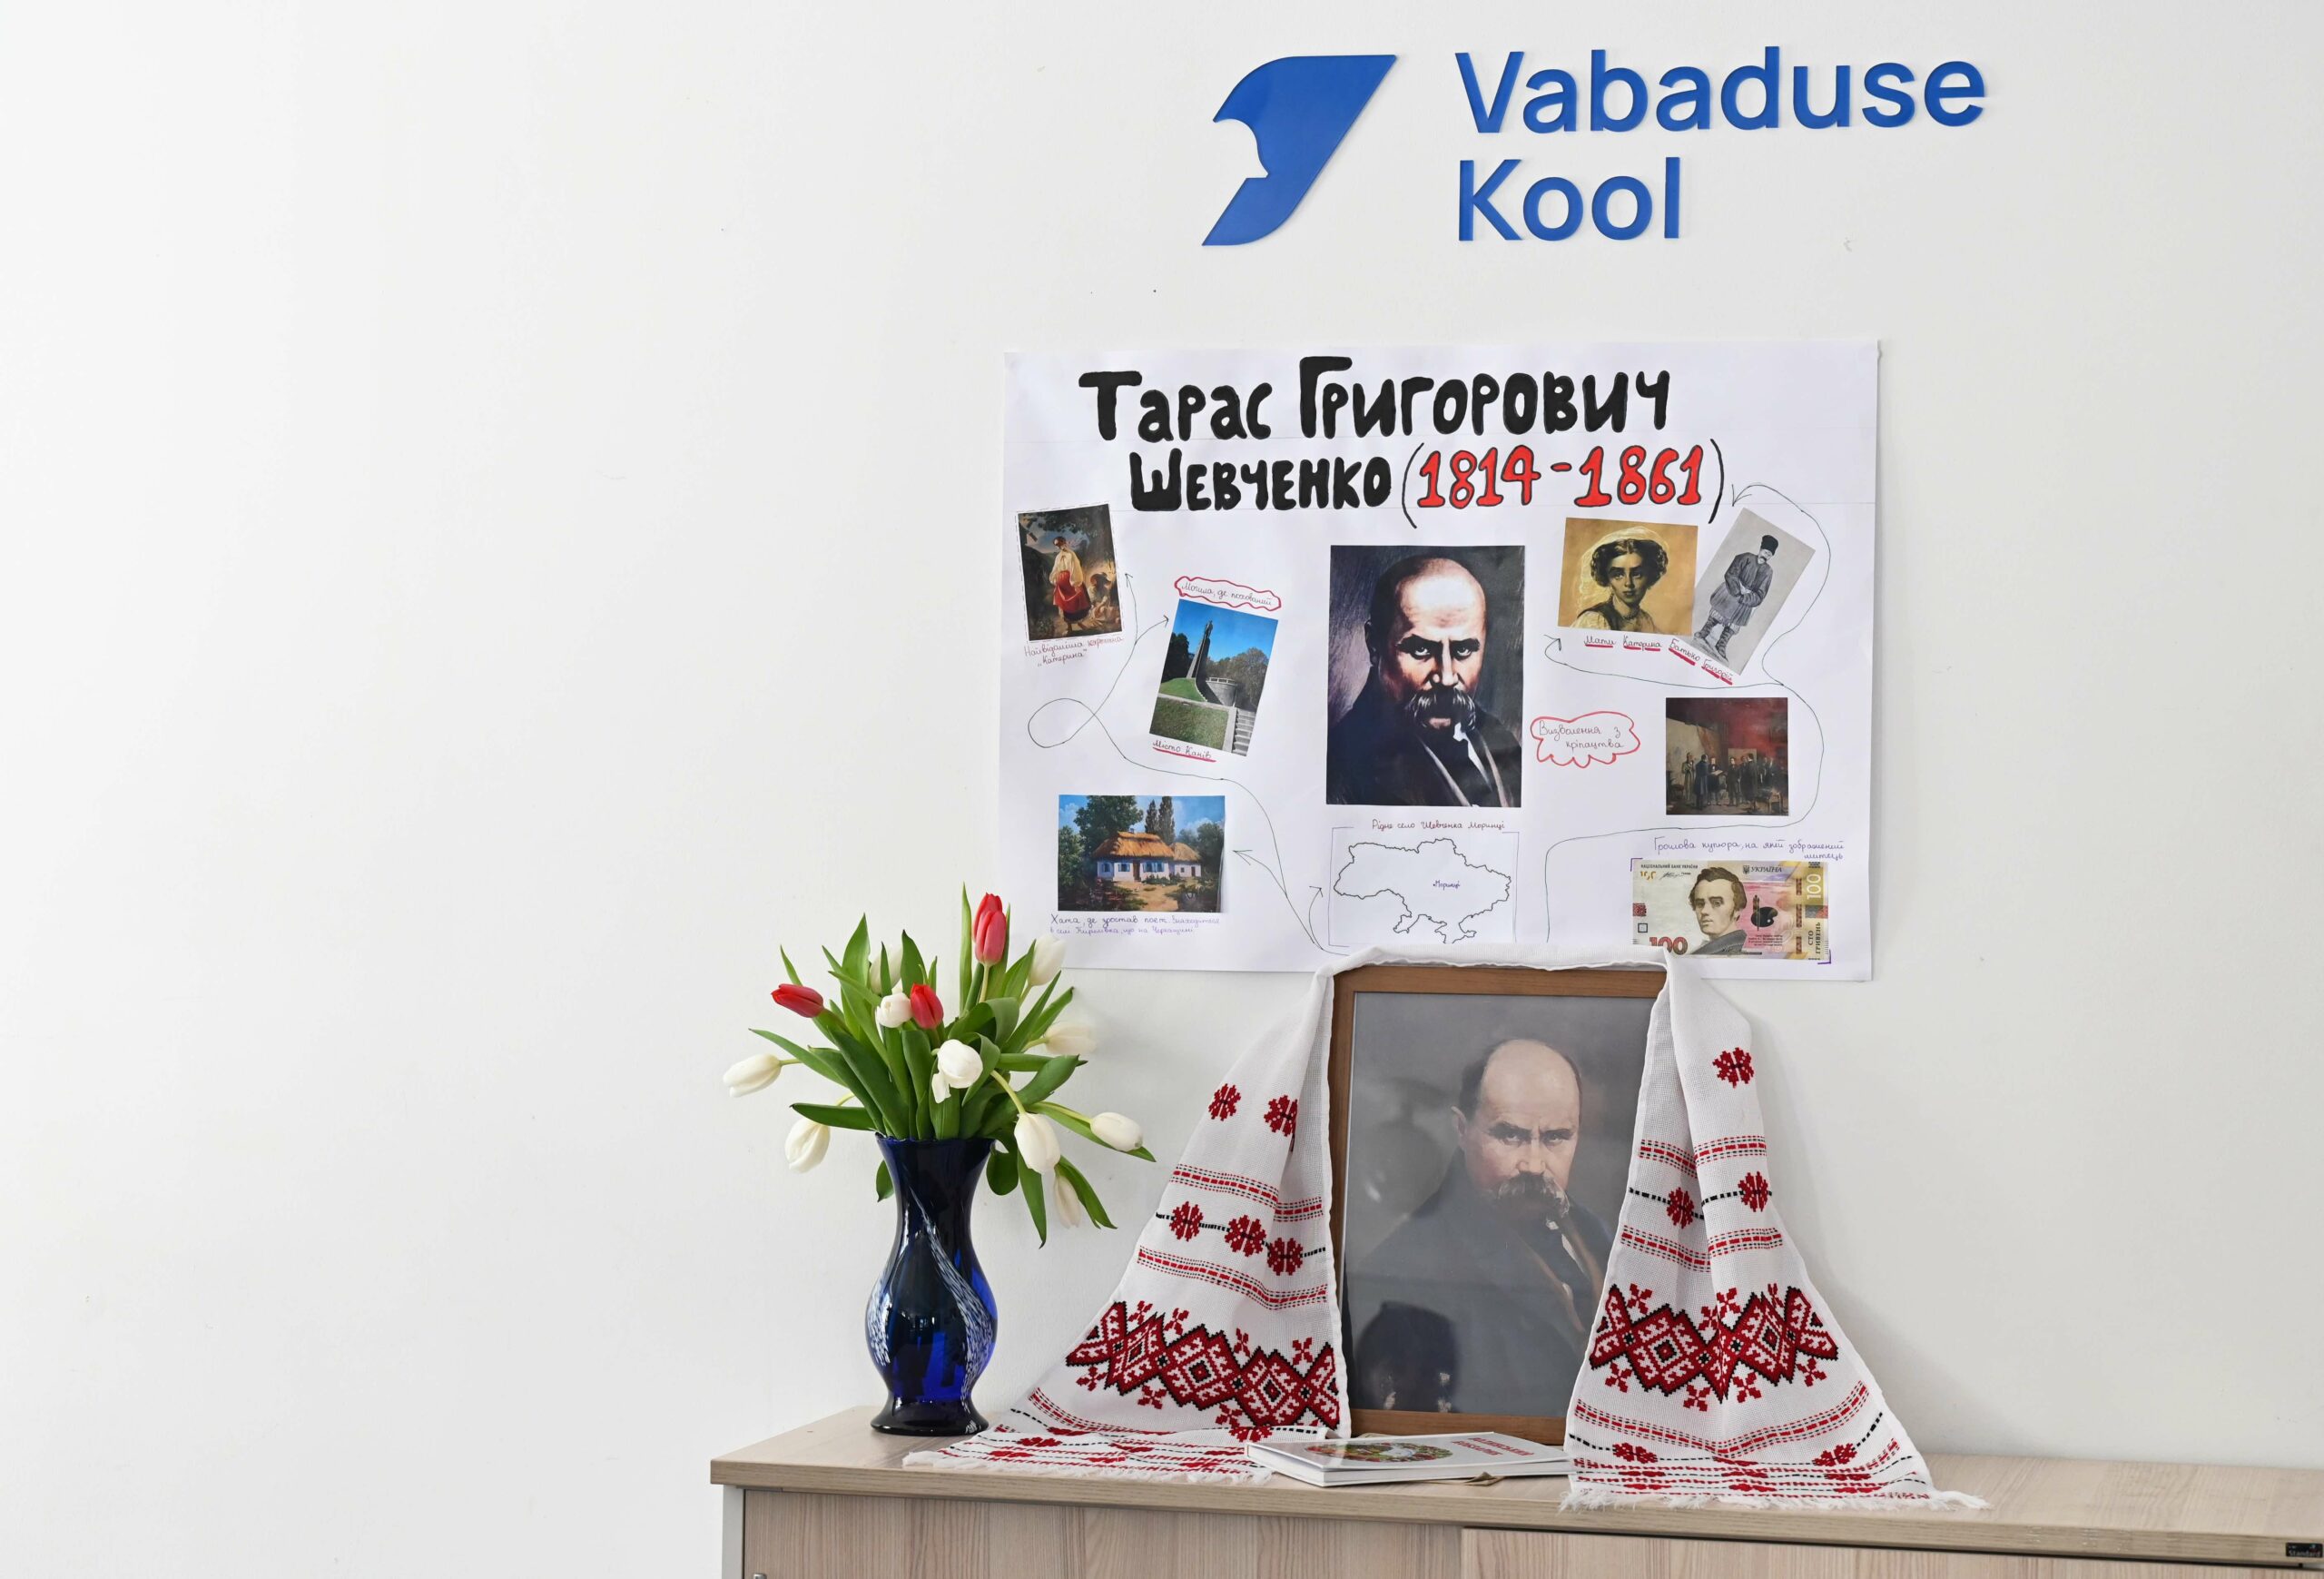 A tribute to Ukrainian writer and poet Taras Shevchenko in the lobby of the Freedom School. (Photo by Teagan Staudenmeier)